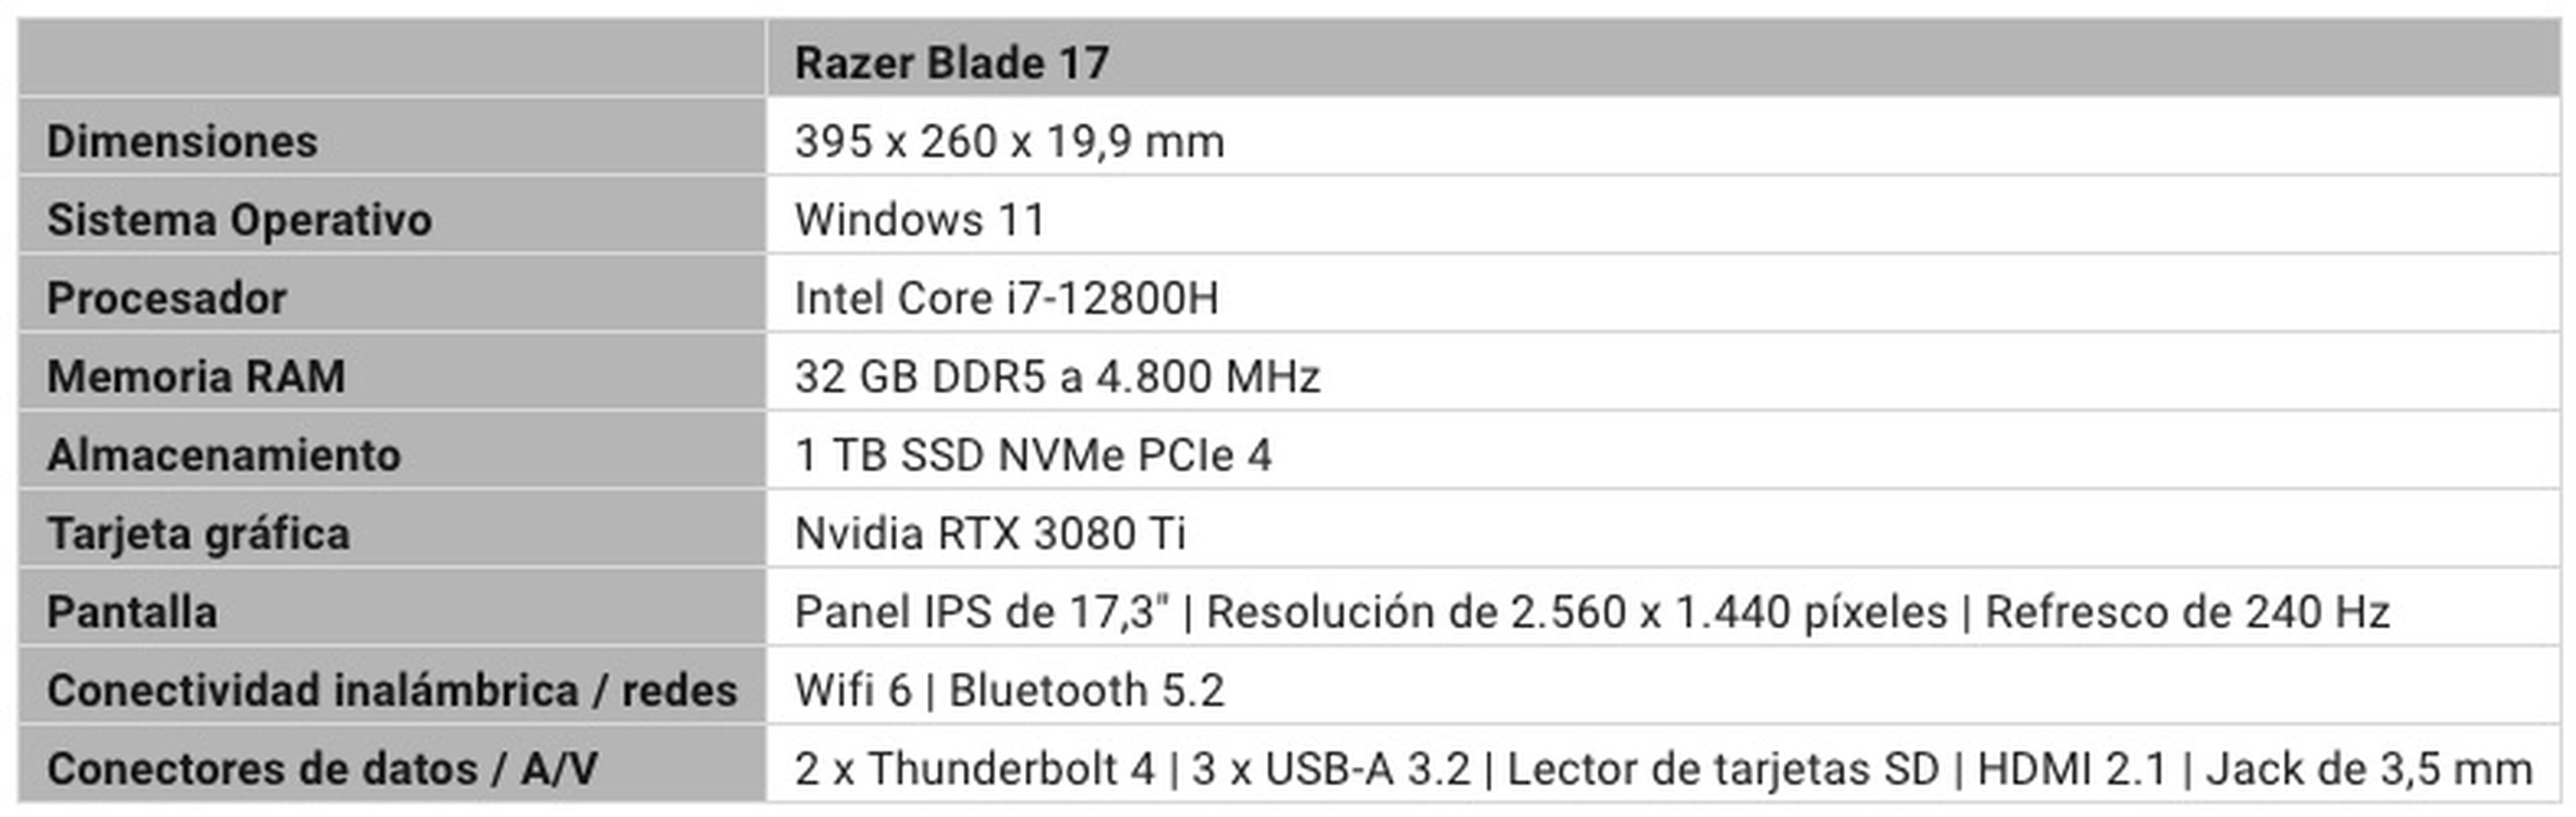 Razer Blade 17